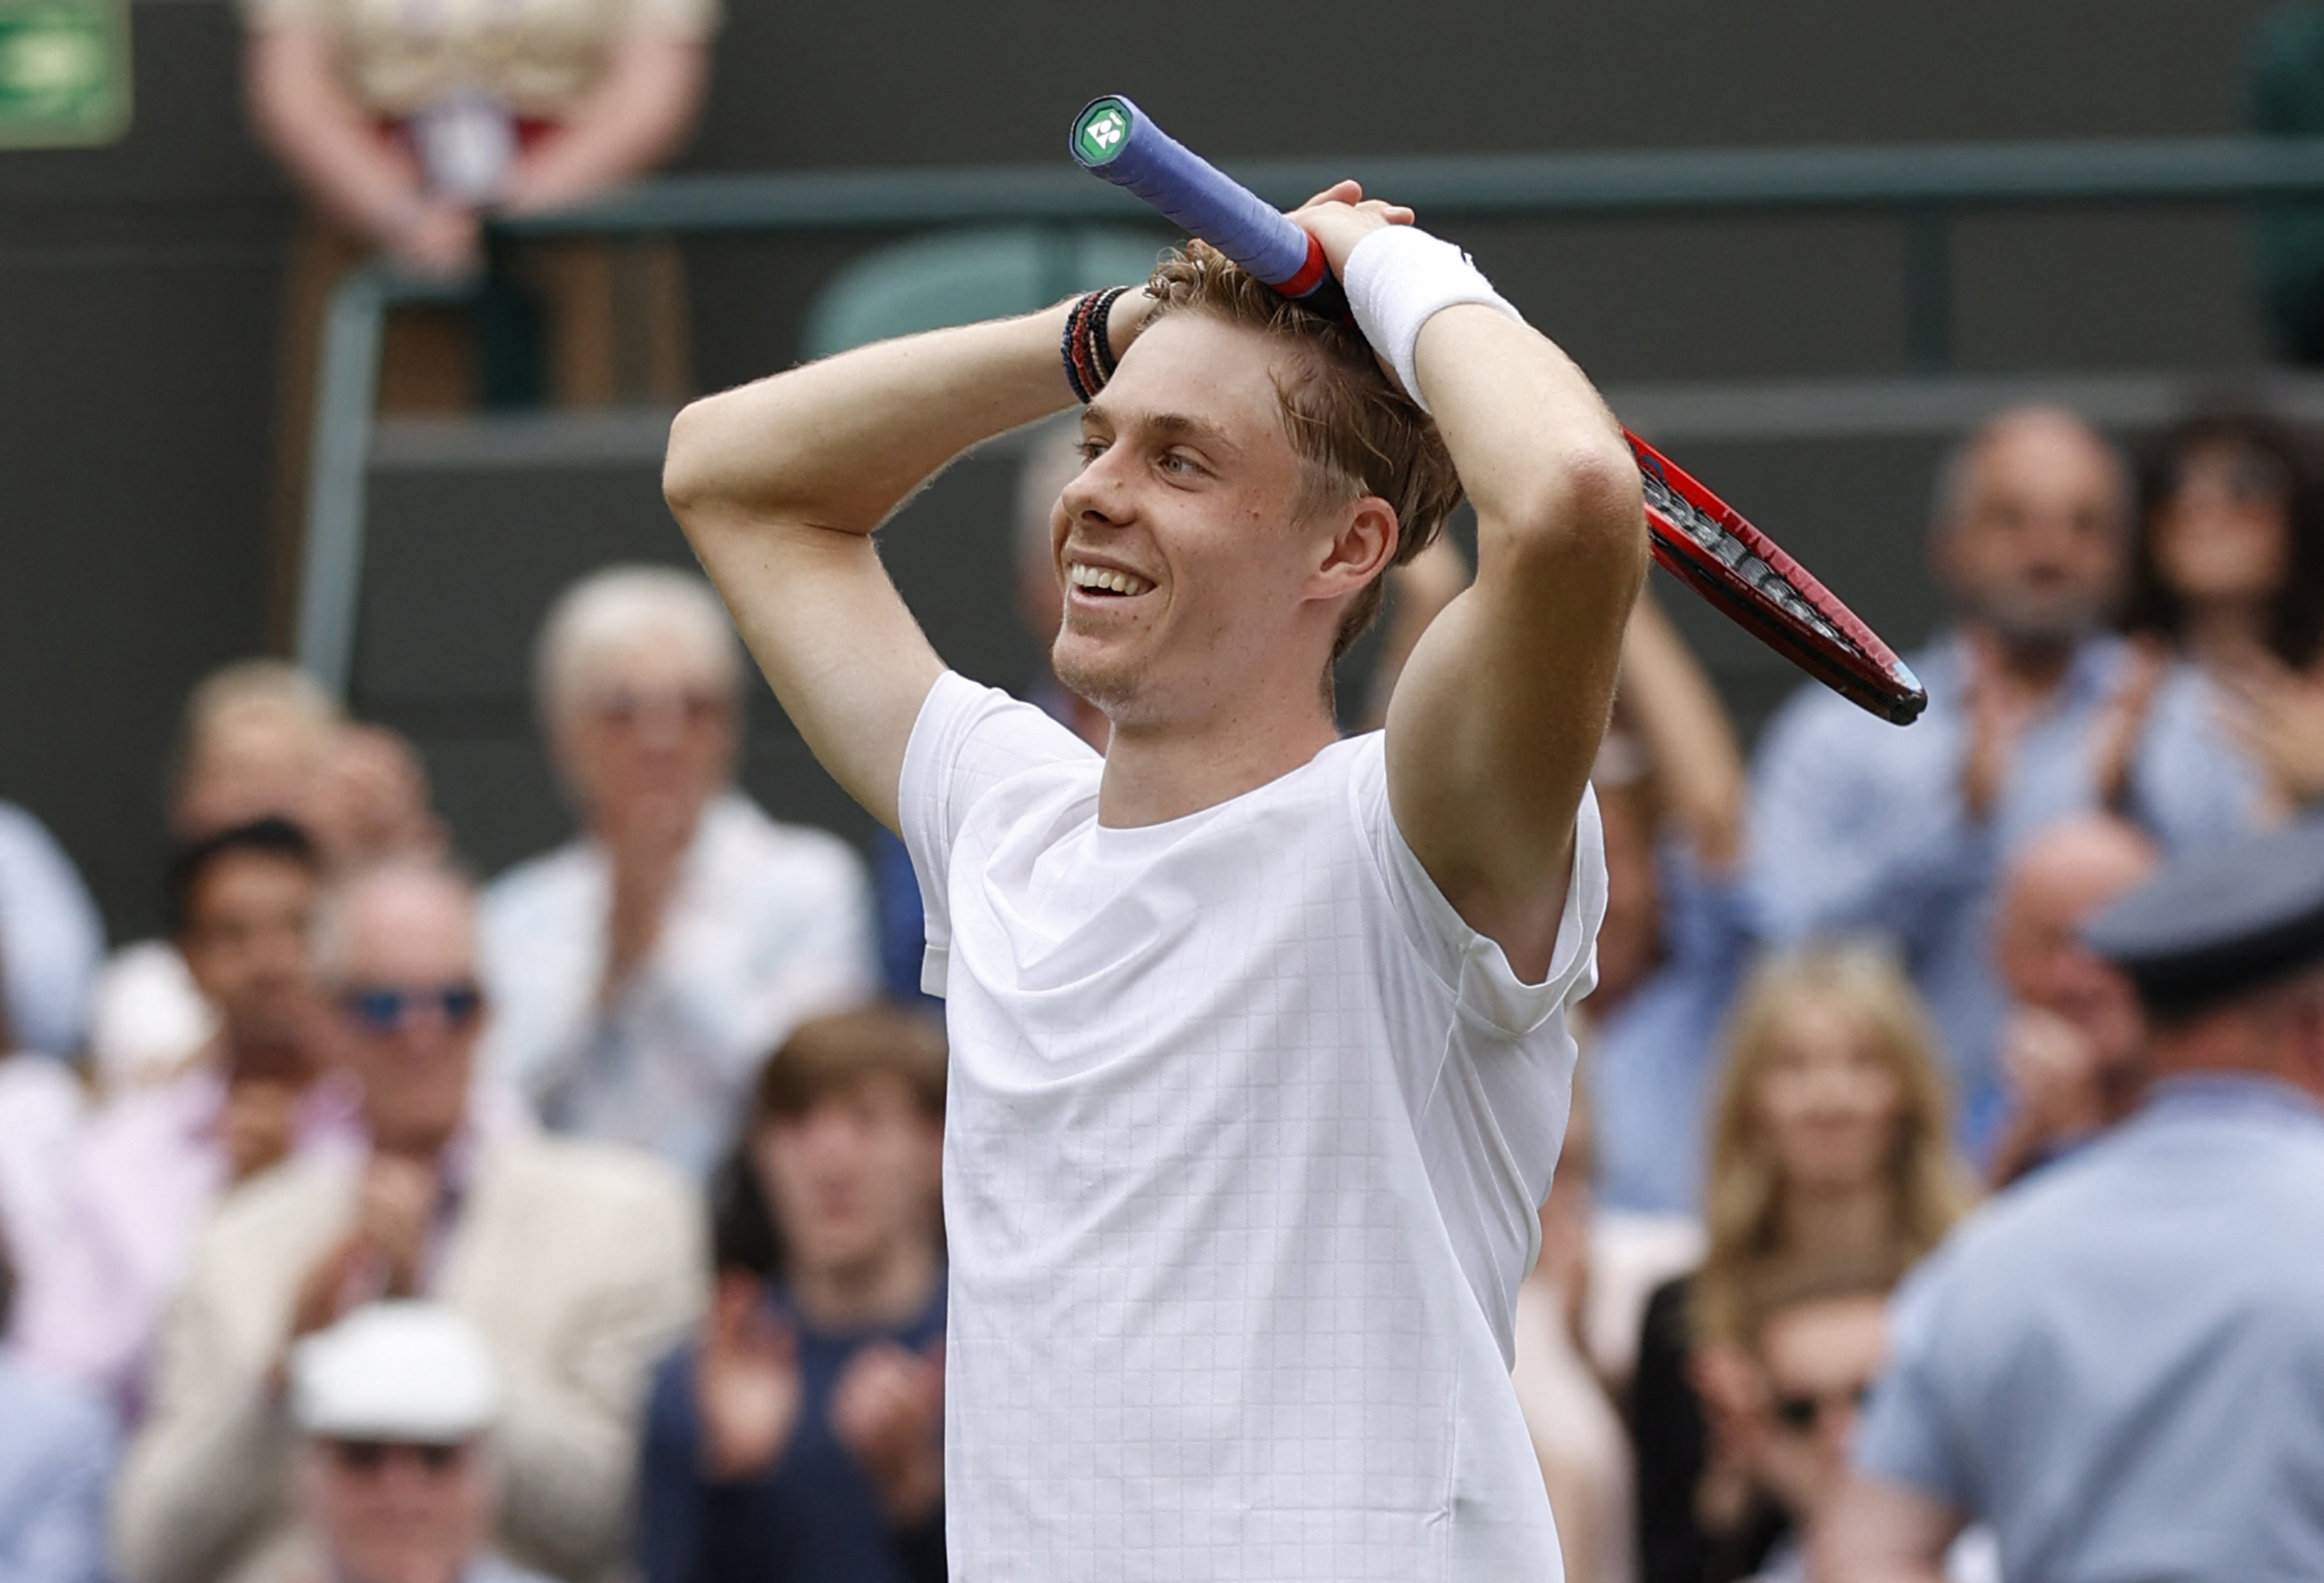 With measured abandon, Denis Shapovalov scores his first Wimbledon semifinal over Karen Khachanov